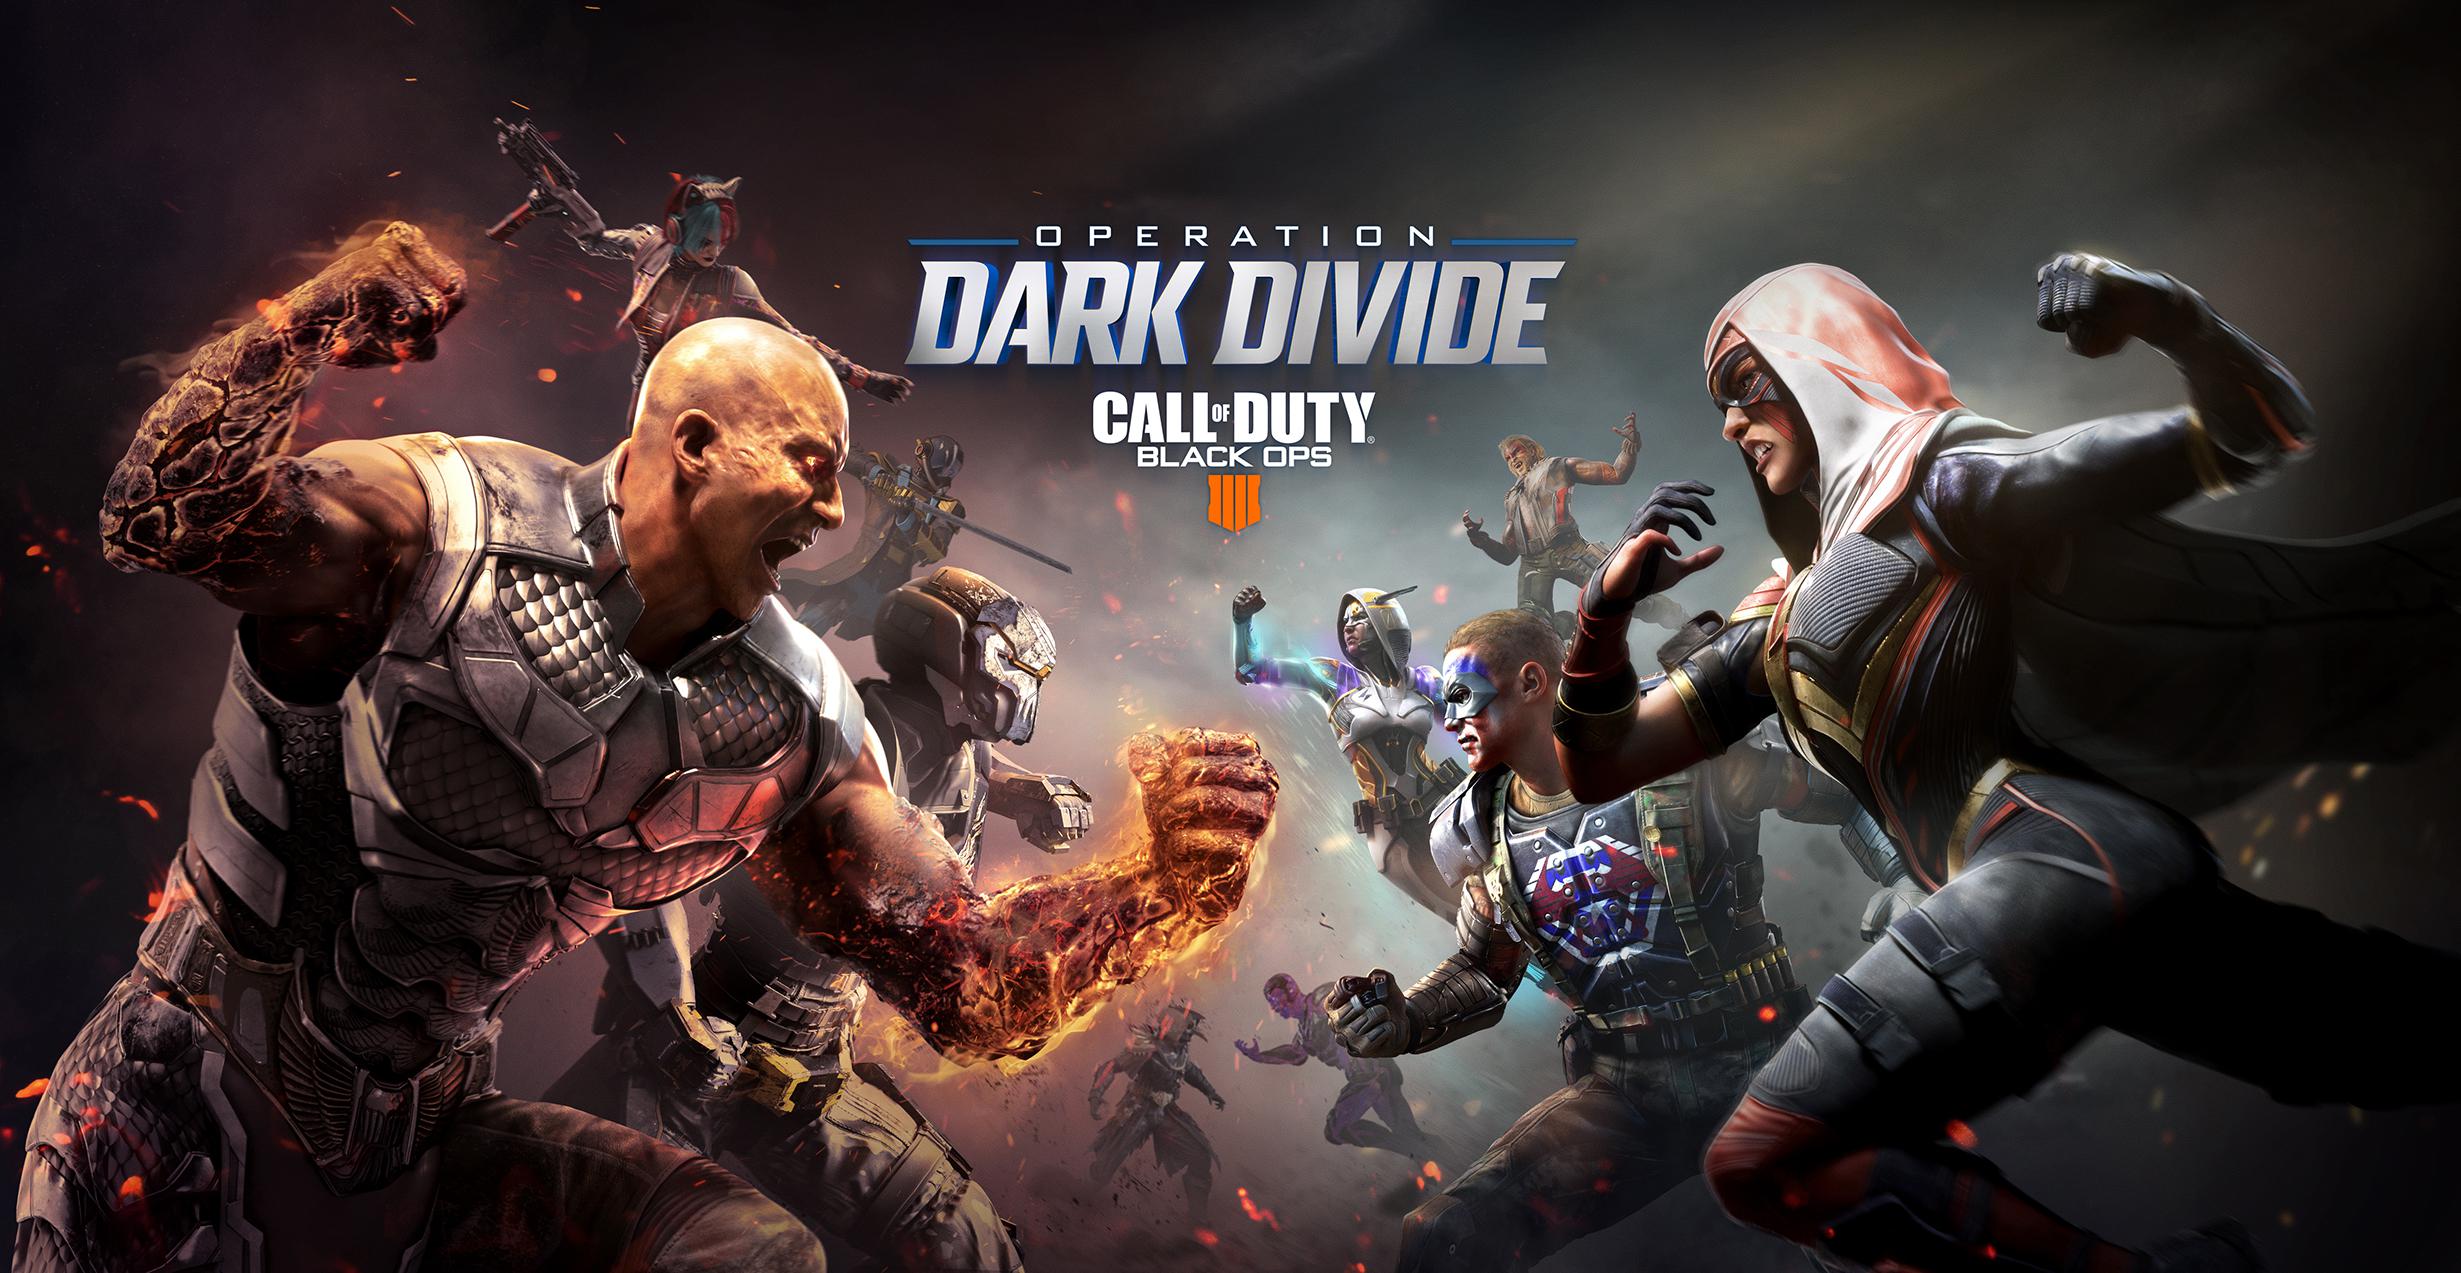 Call Of Duty Black Ops 4 S Final Operation Is Dark Divide Eurogamer Net